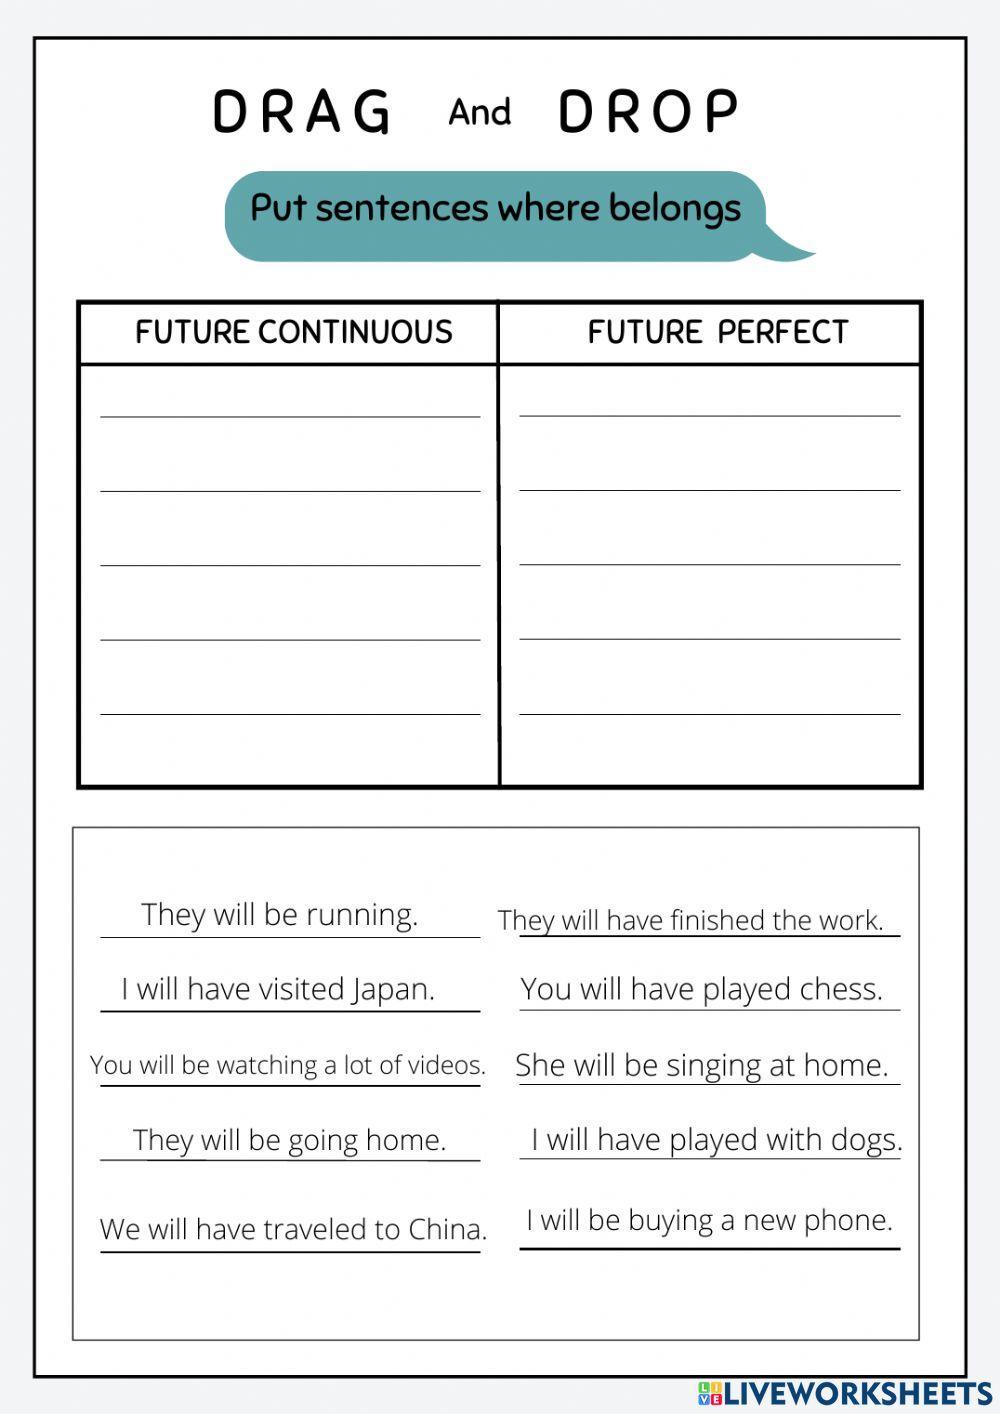 Future Continuous Sentences and Future Perfect